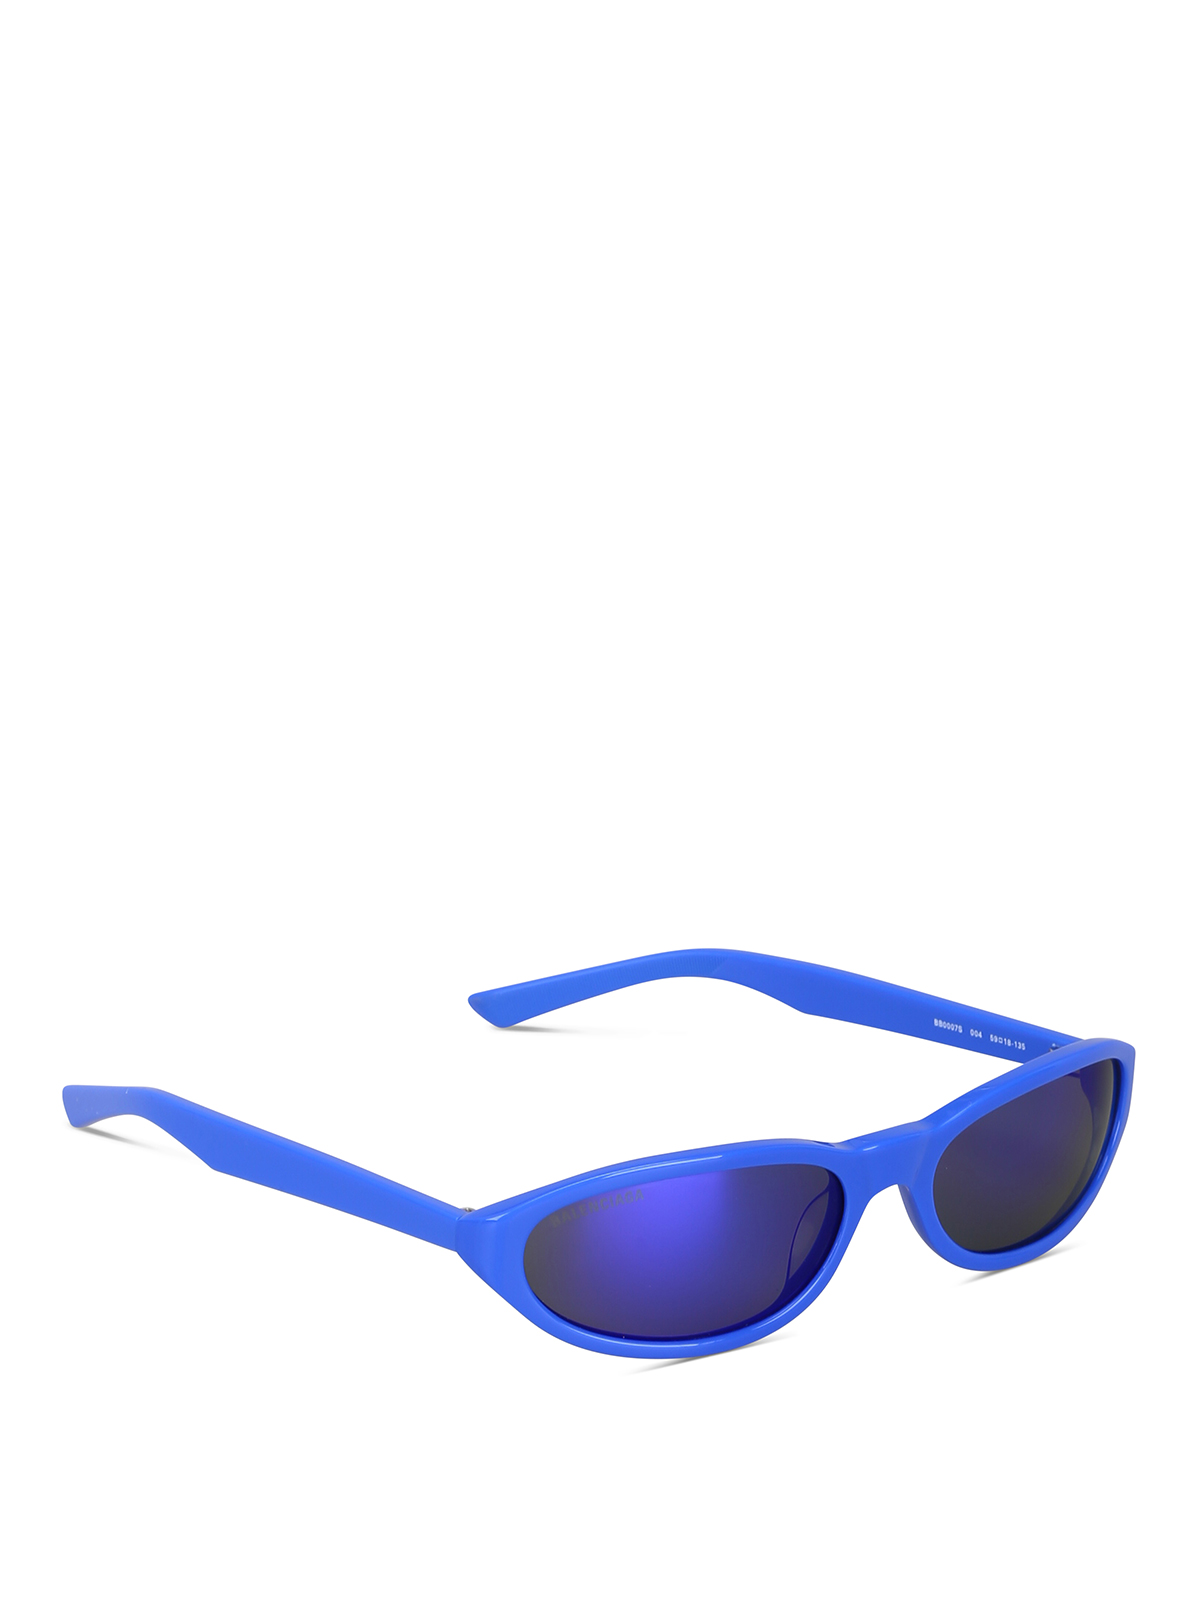 balenciaga sunglasses blue